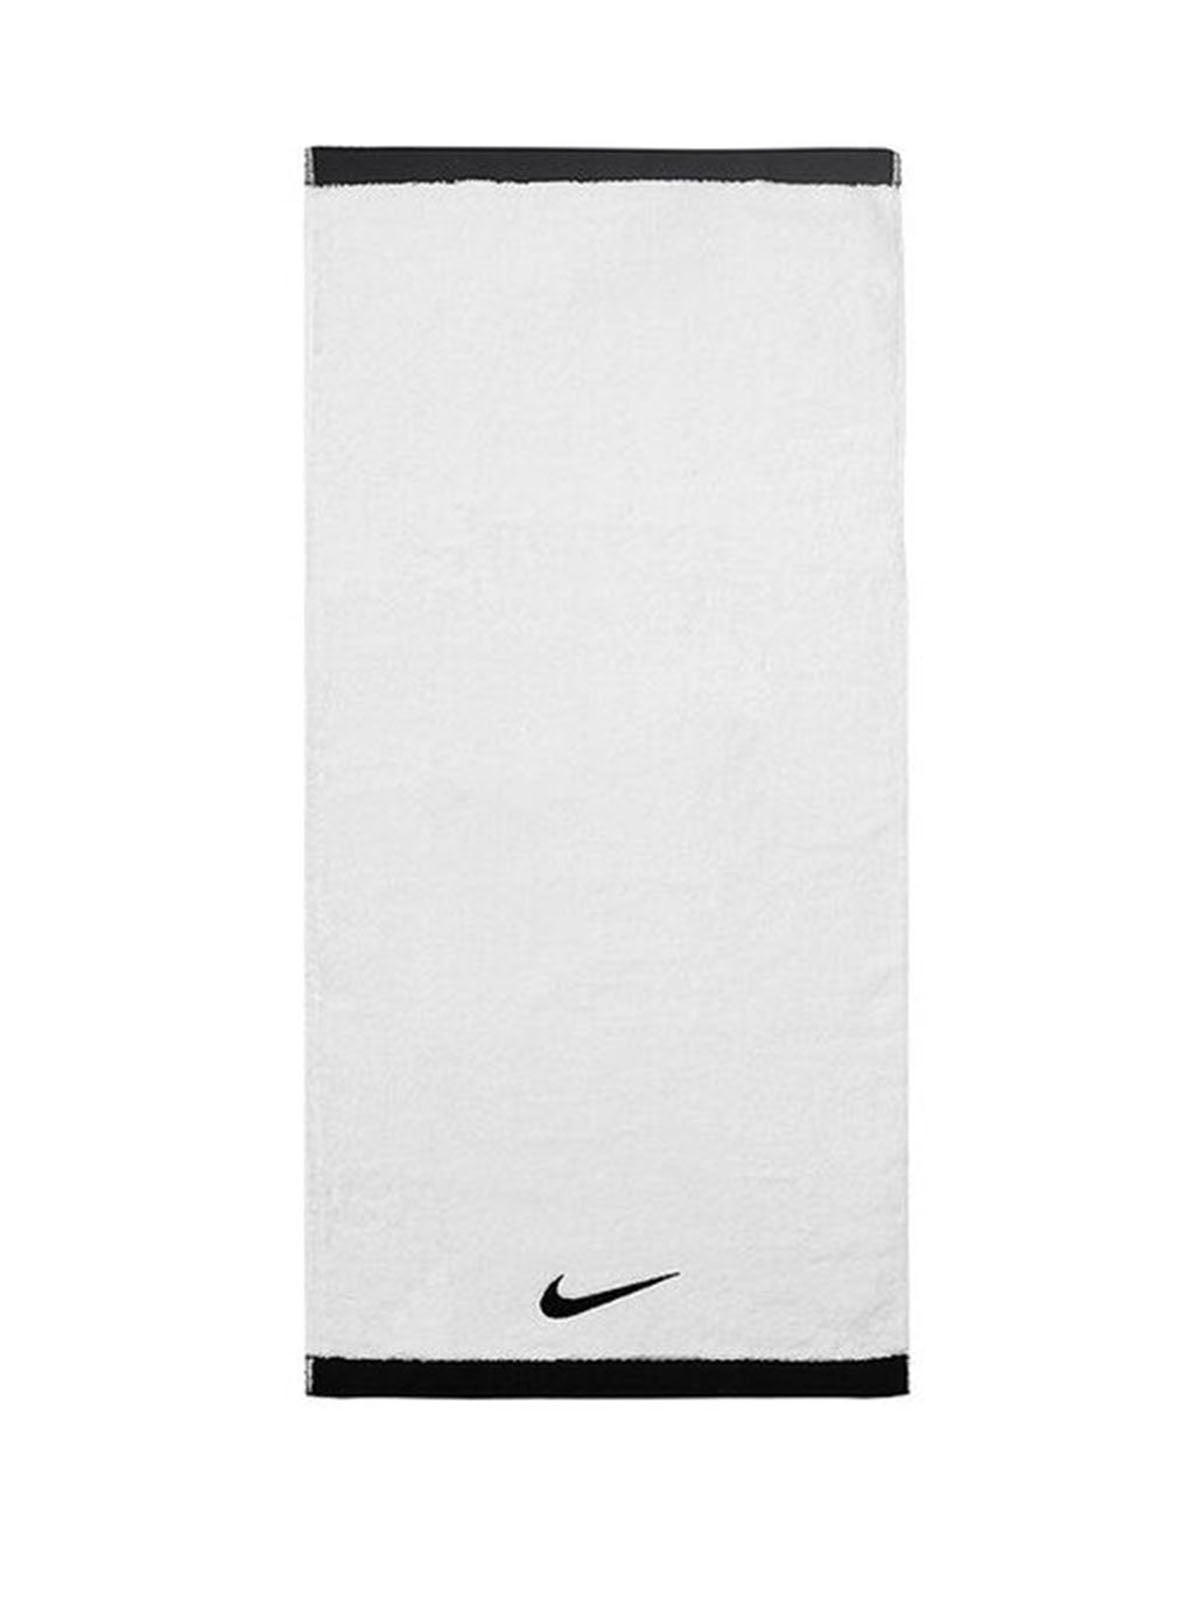 Asciugamani da palestra Unisex Nike - Nike Fundamental Medium Towel - Bianco